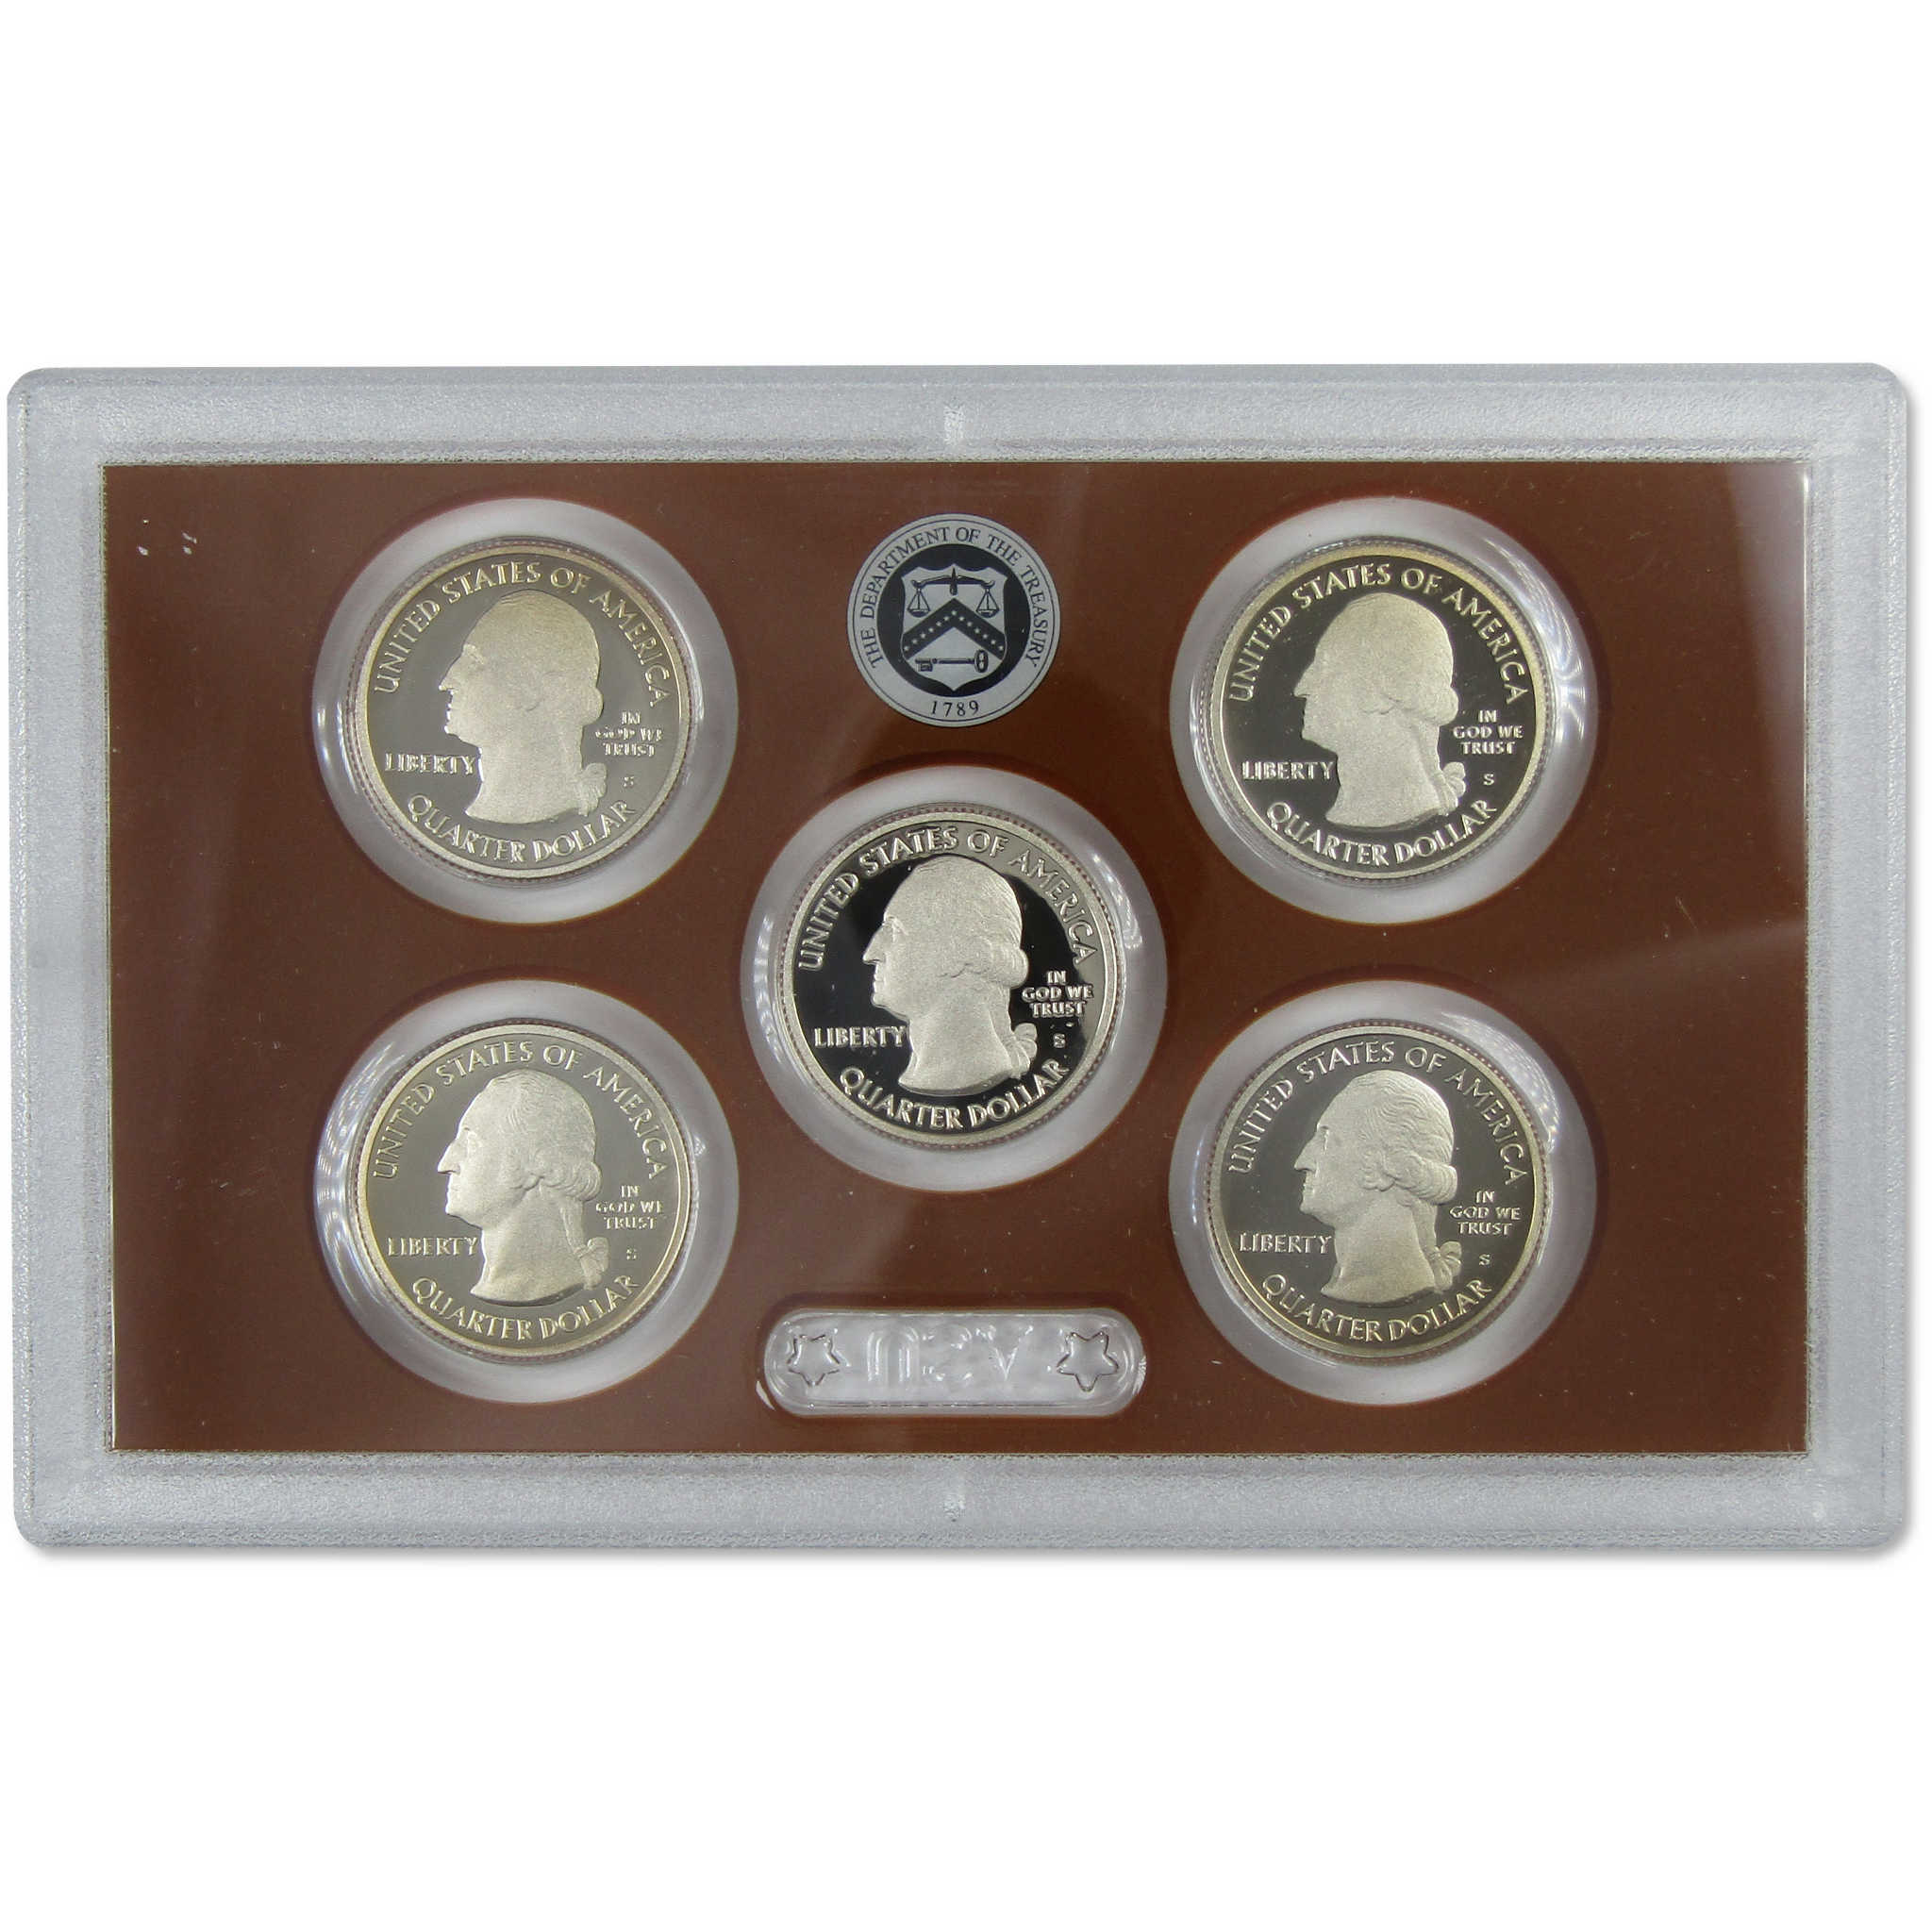 2012 America the Beautiful Quarter Clad Proof Set U.S. Mint OGP COA